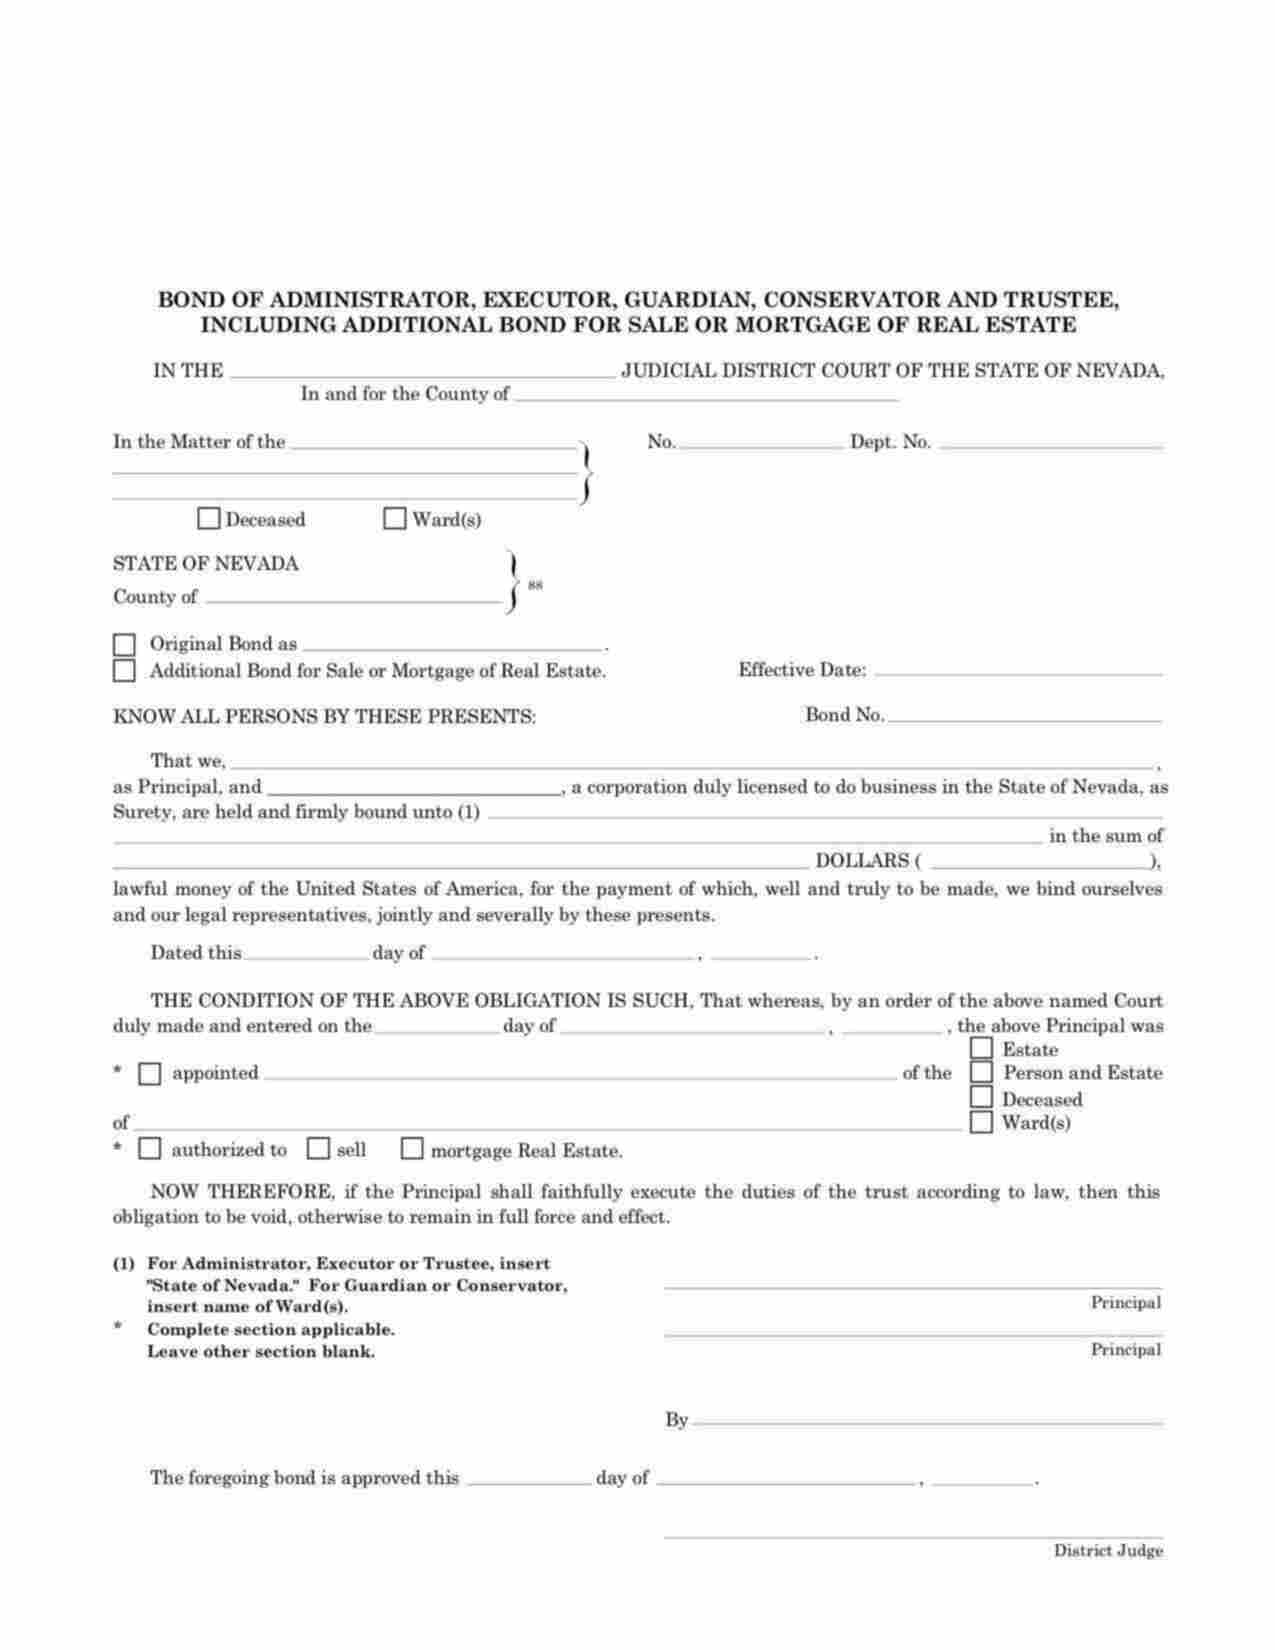 Nevada Probate Administrator, Executor, Conservator, or Guardian Bond Form